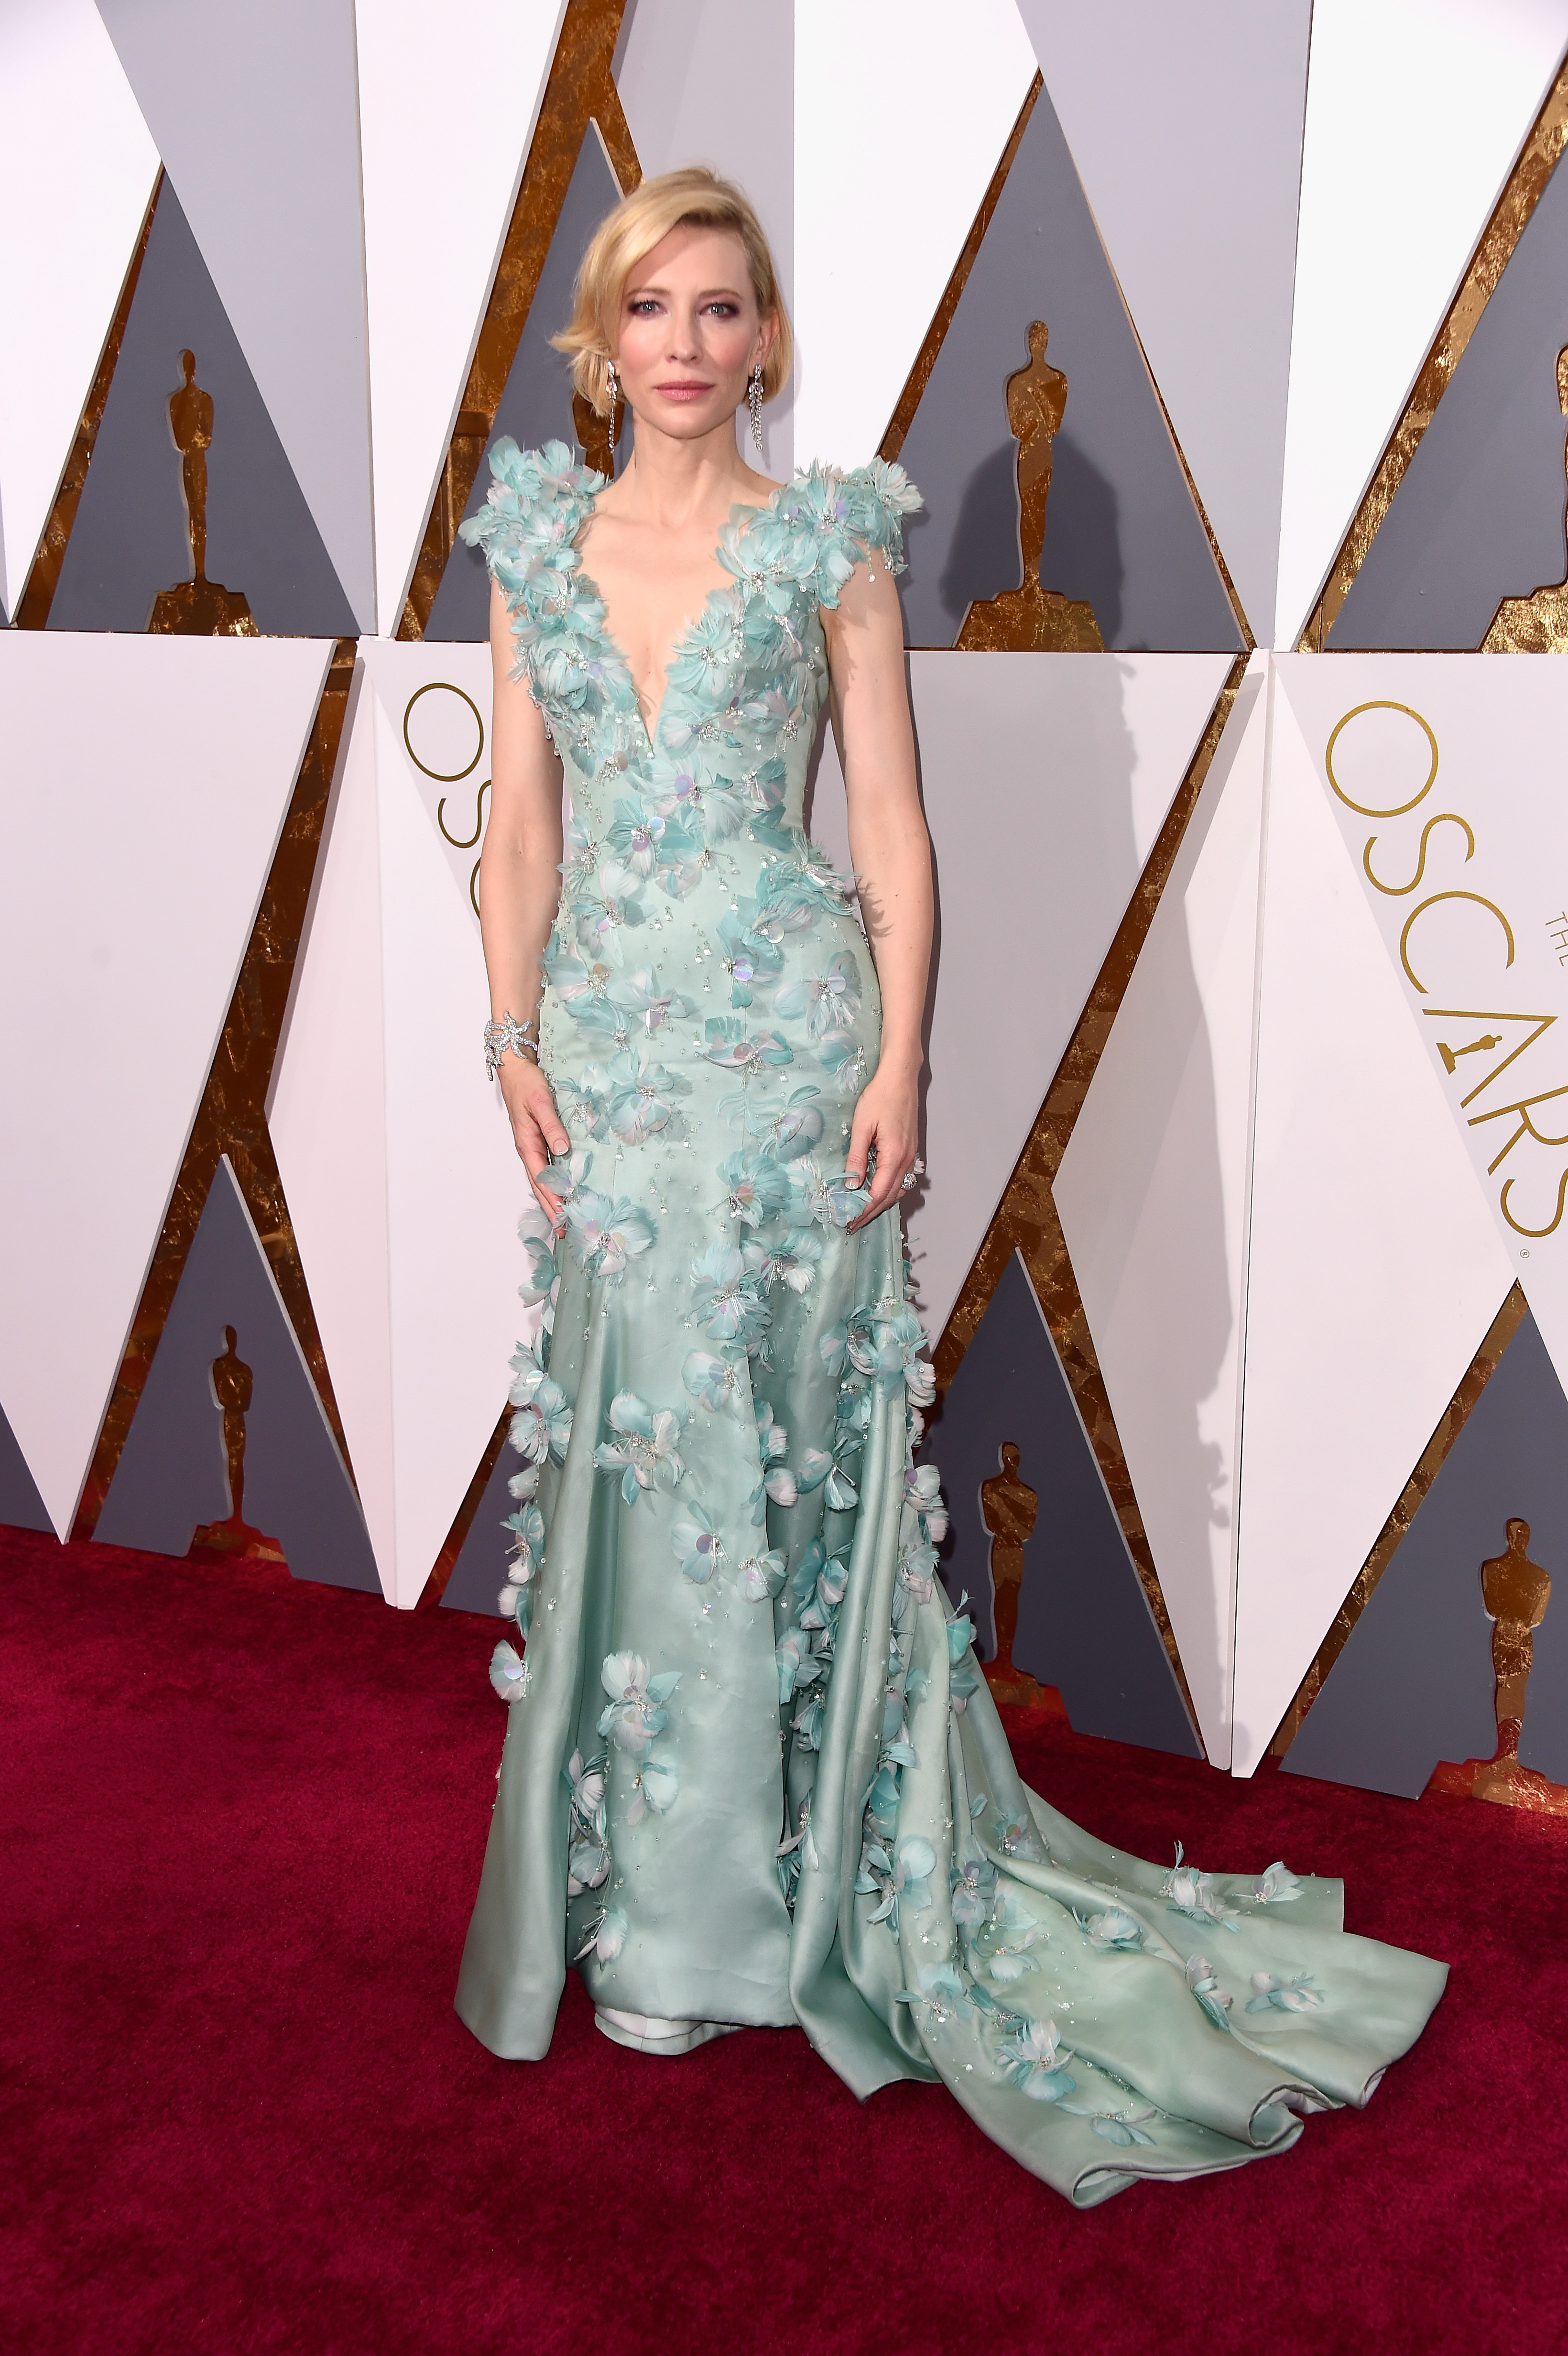 Cate Blanchett Giorgio Armani Oscars dresses dress